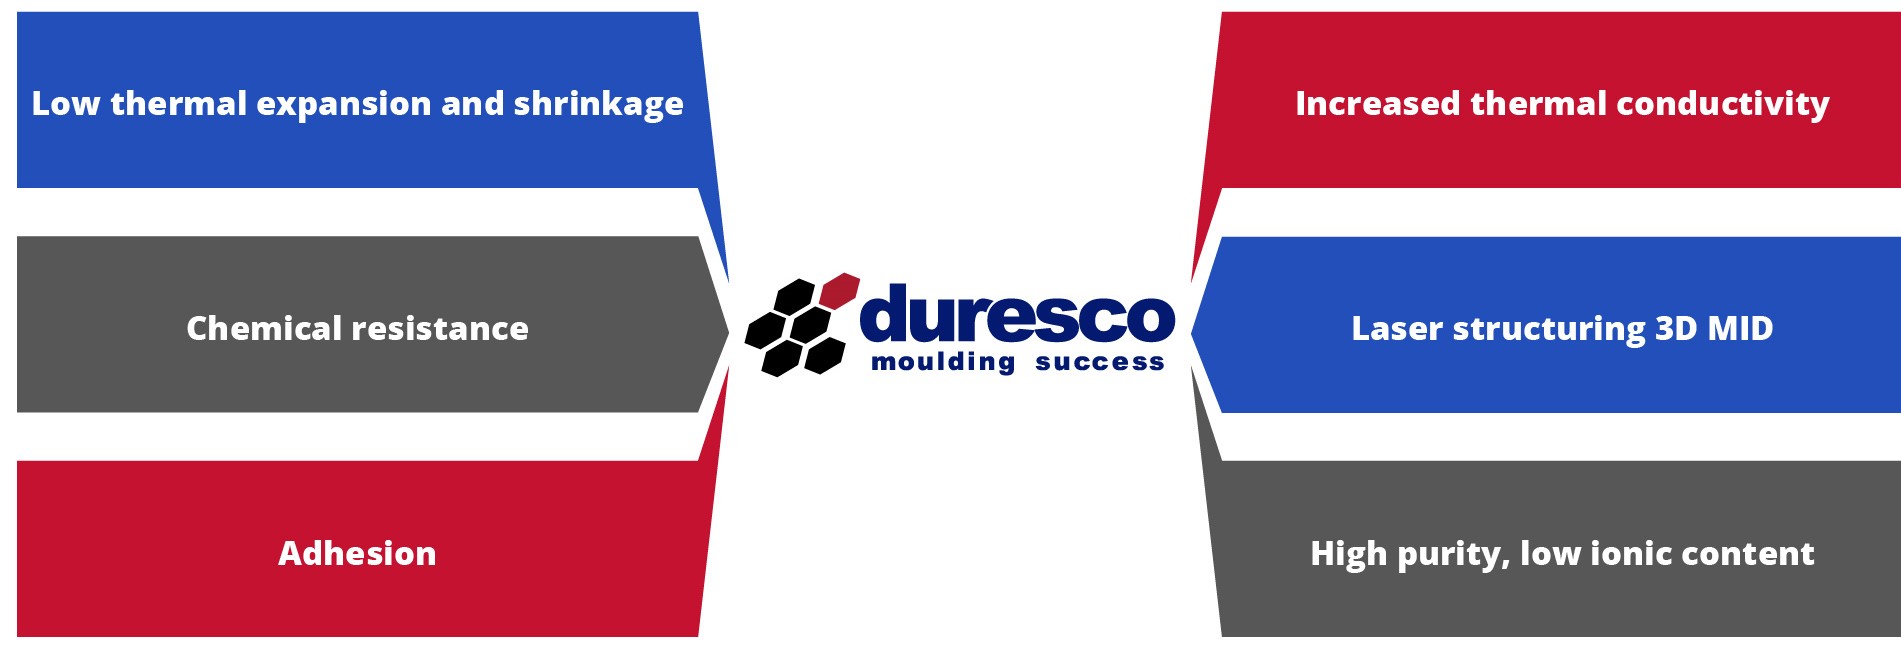 New solutions from Duresco